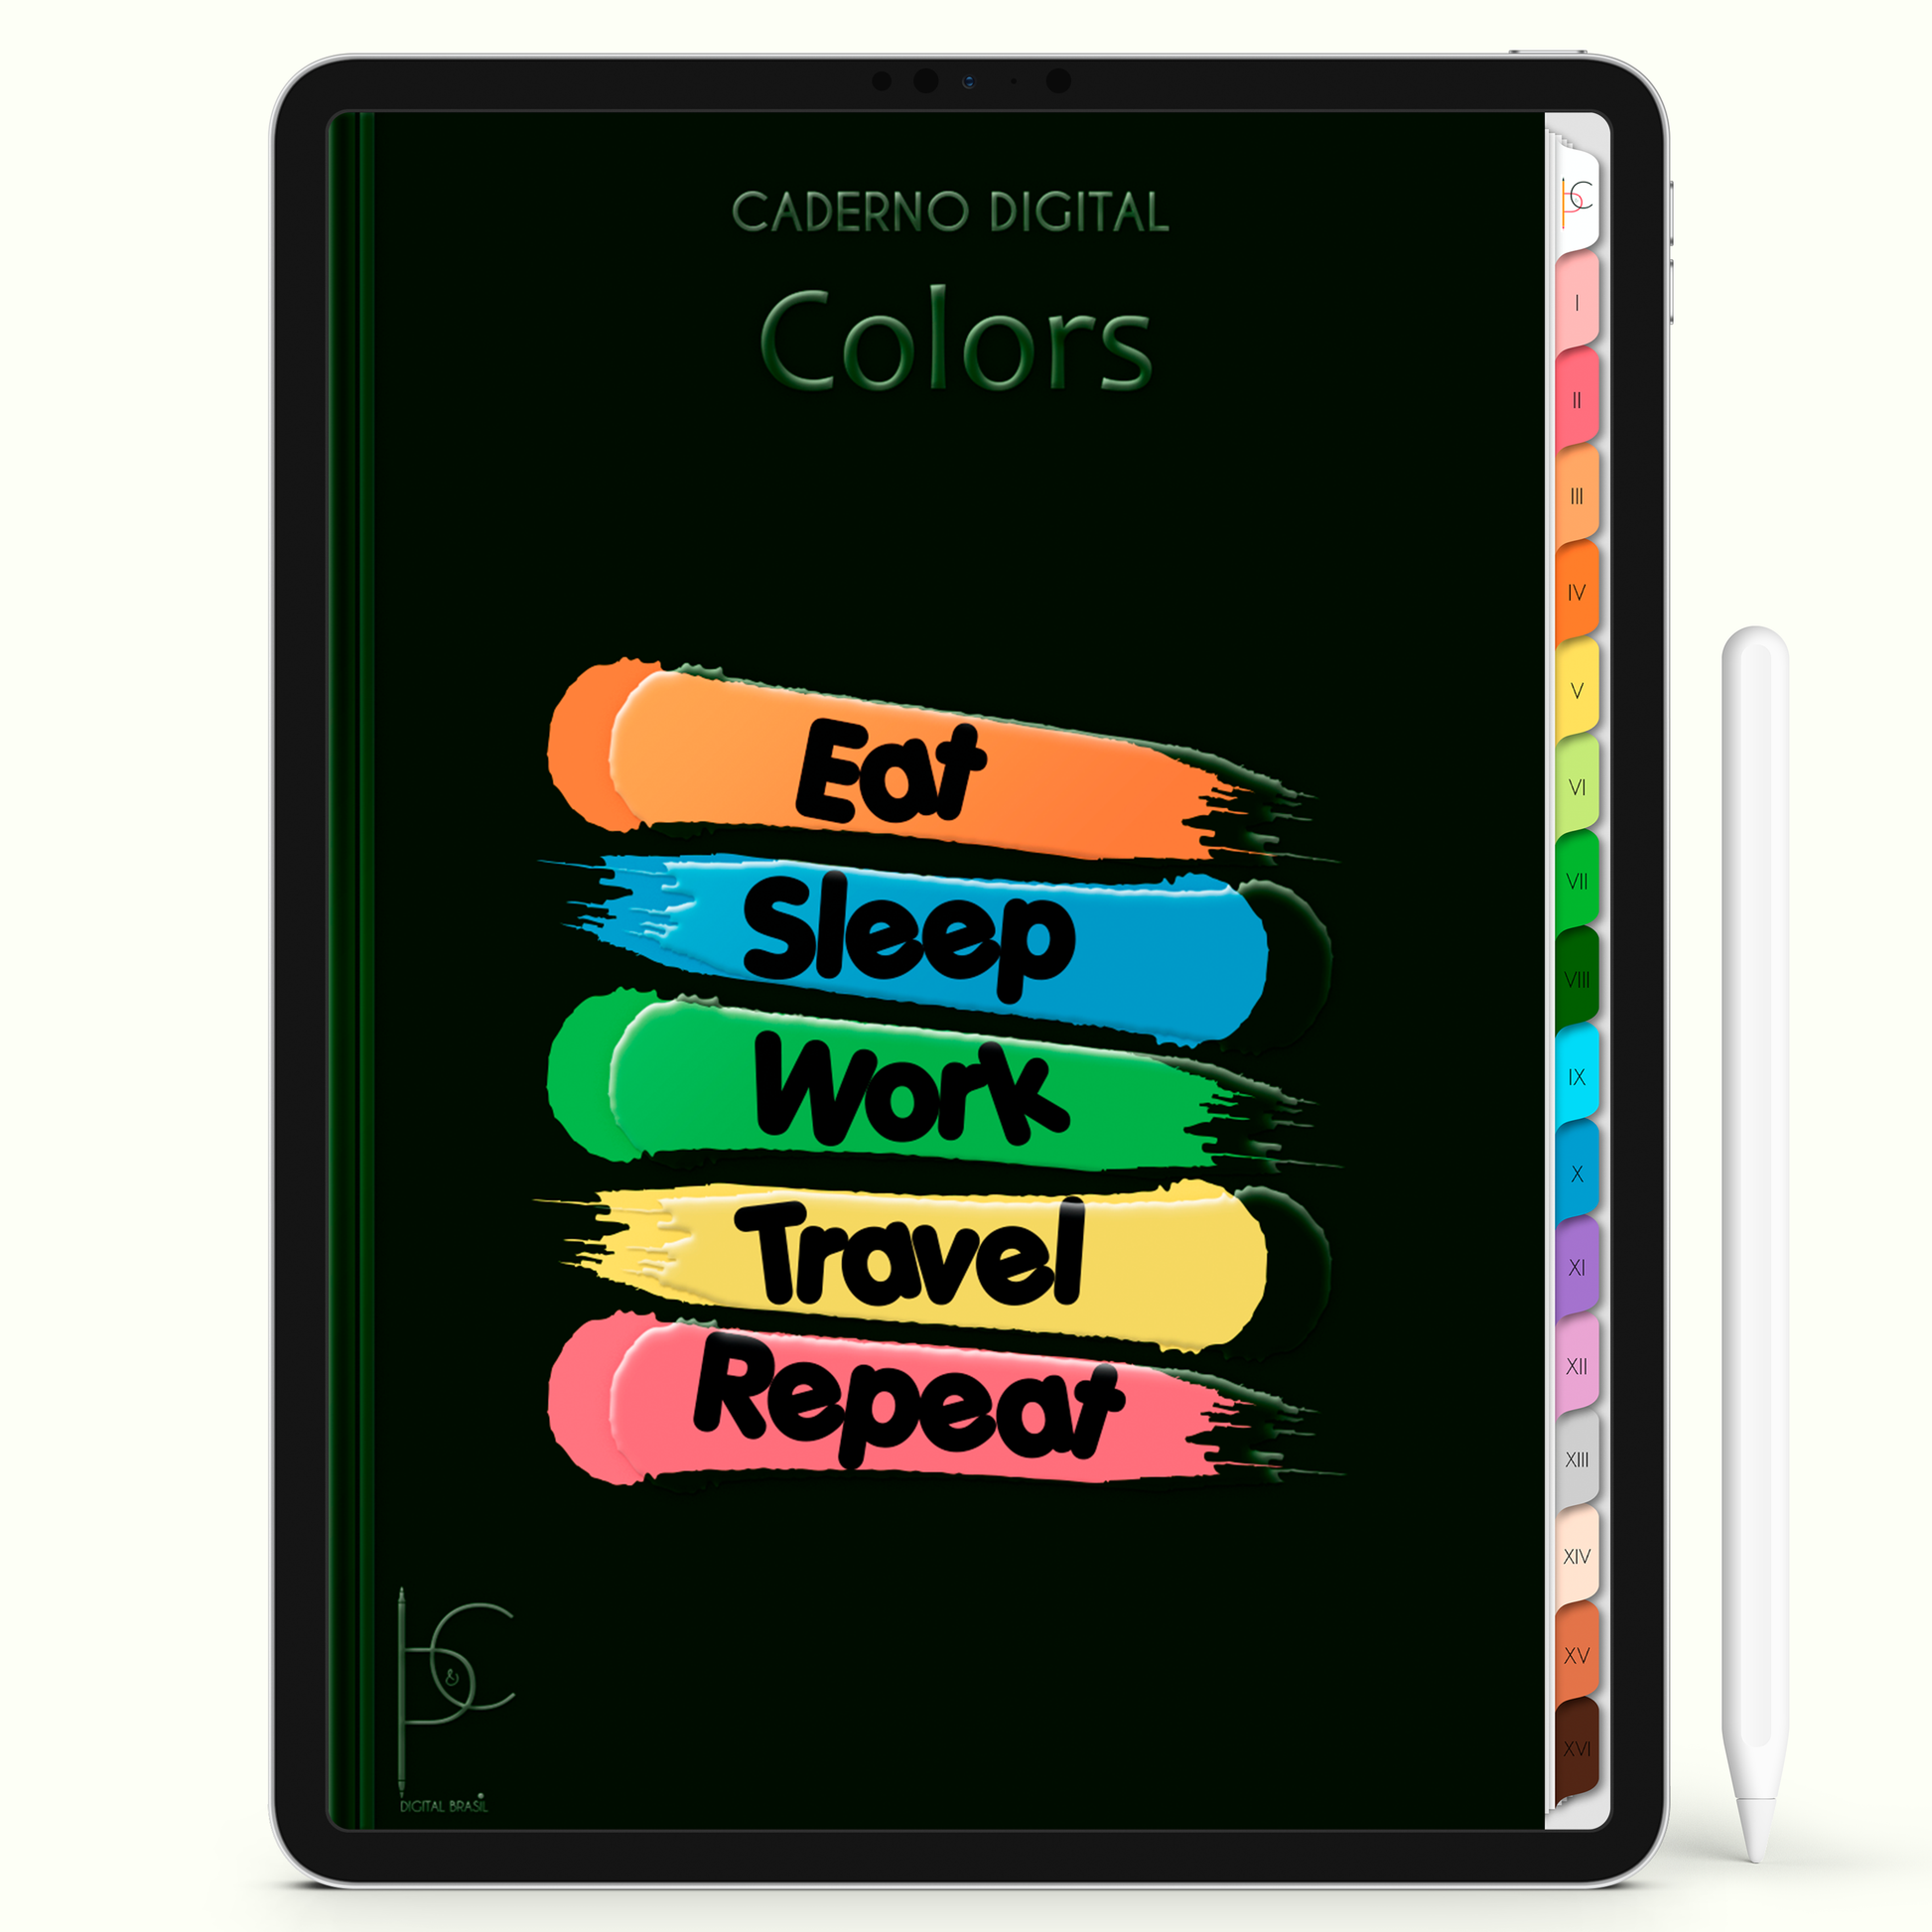 Caderno Digital Colors Study Progress 16 Matérias • Para iPad e Tablet Android • Download instantâneo • Sustentável